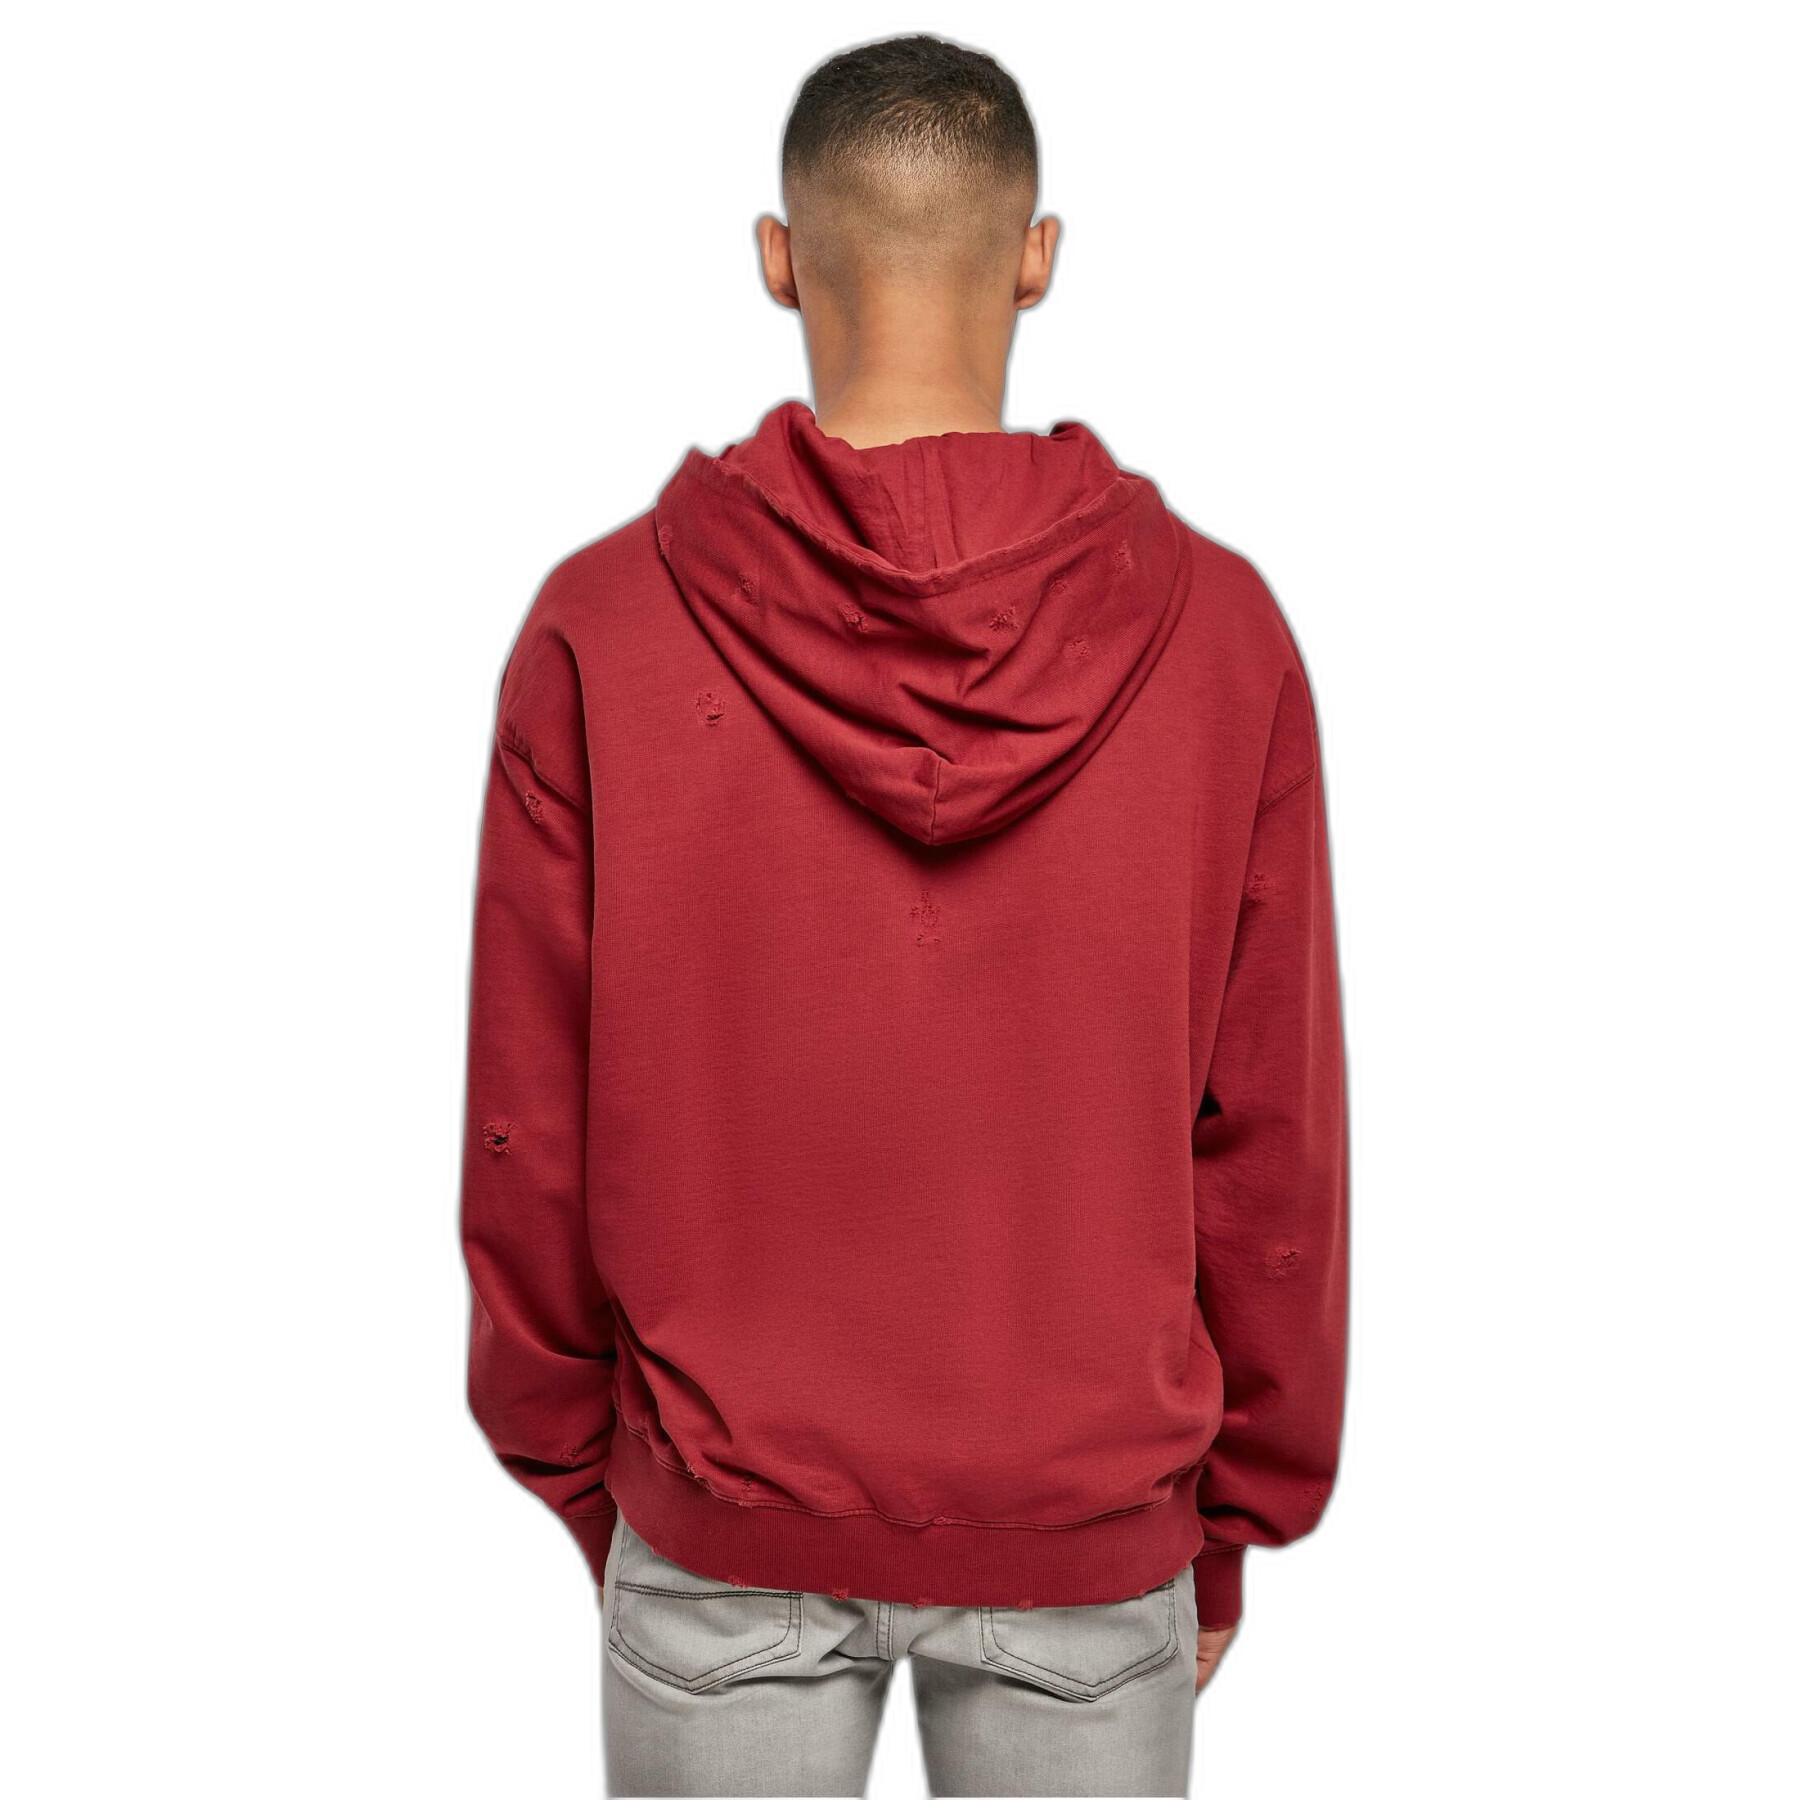 Hooded sweatshirt Urban Classics Distressed